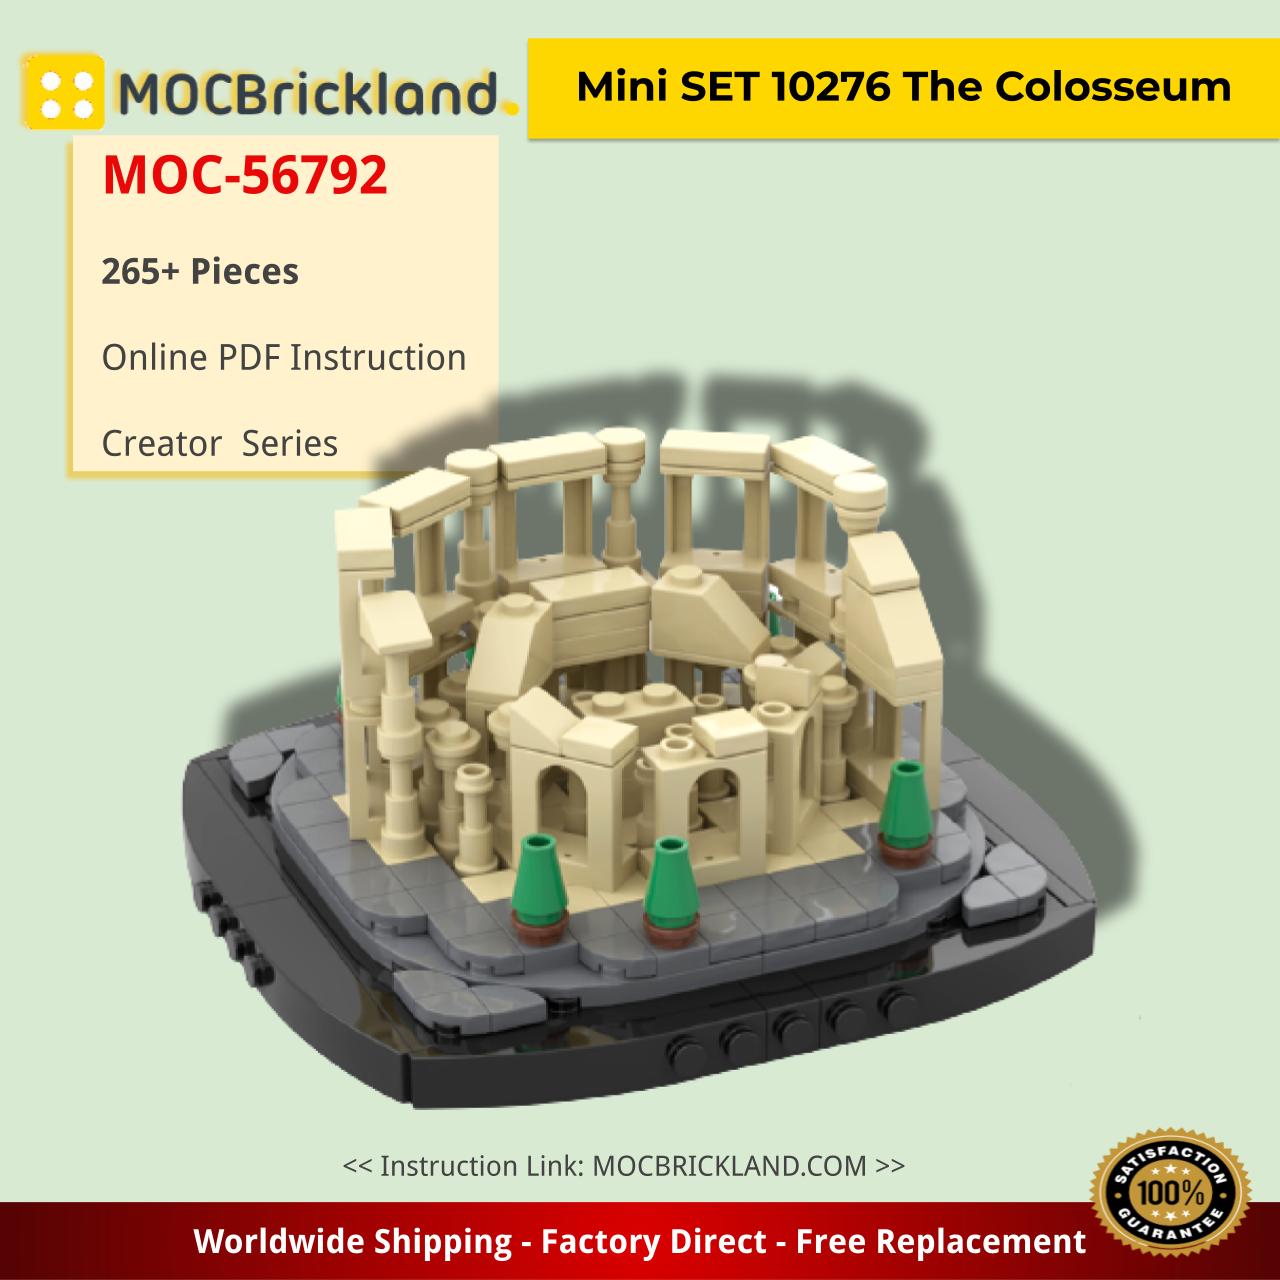 creator moc 56792 mini set 10276 the colosseum by gabizon mocbrickland 8953